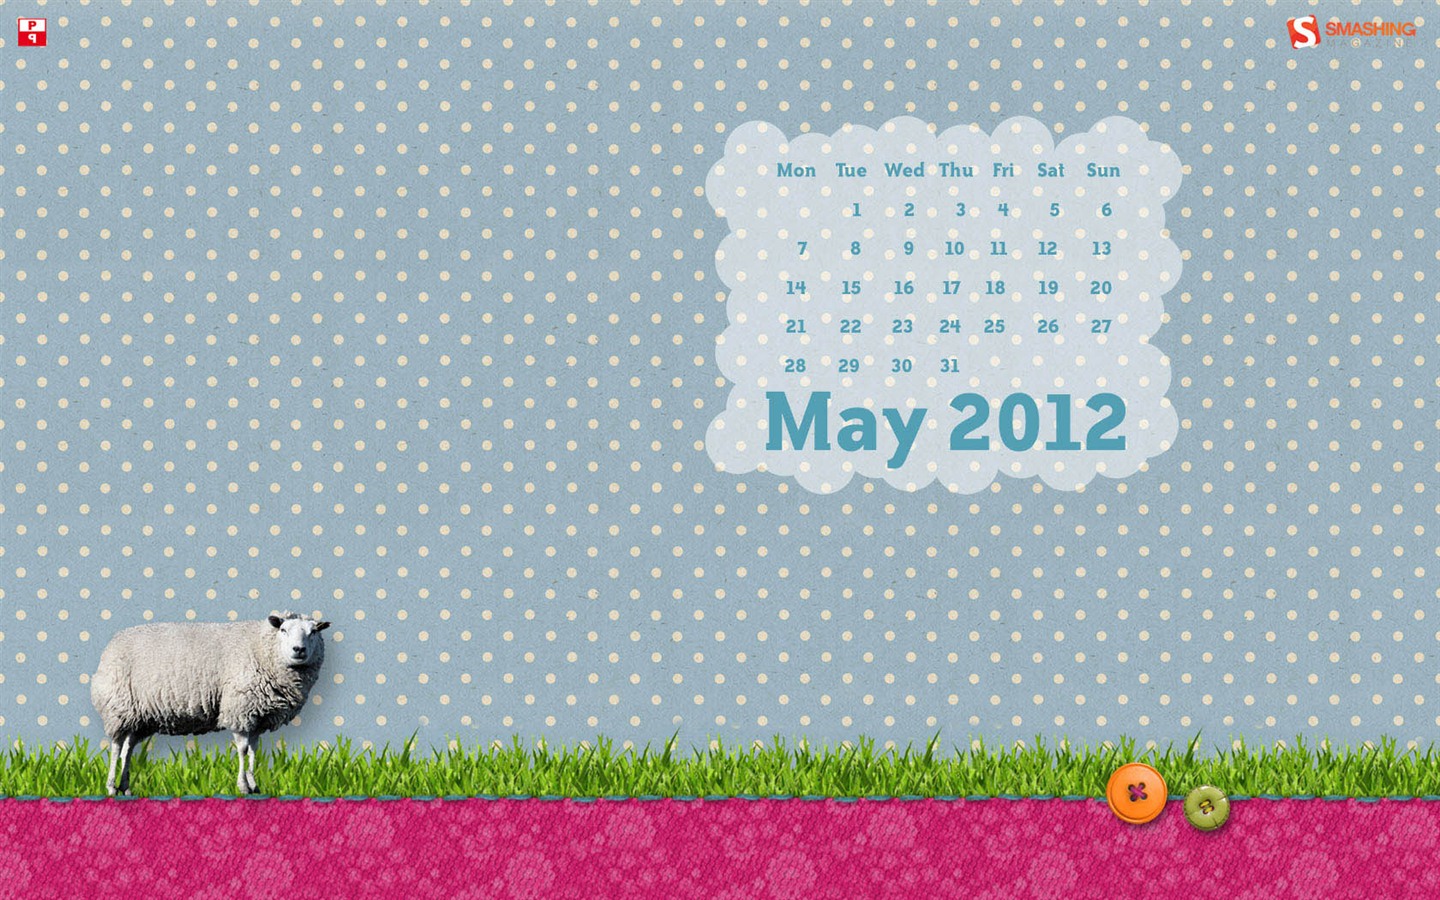 Mai 2012 fonds d'écran calendrier (2) #8 - 1440x900